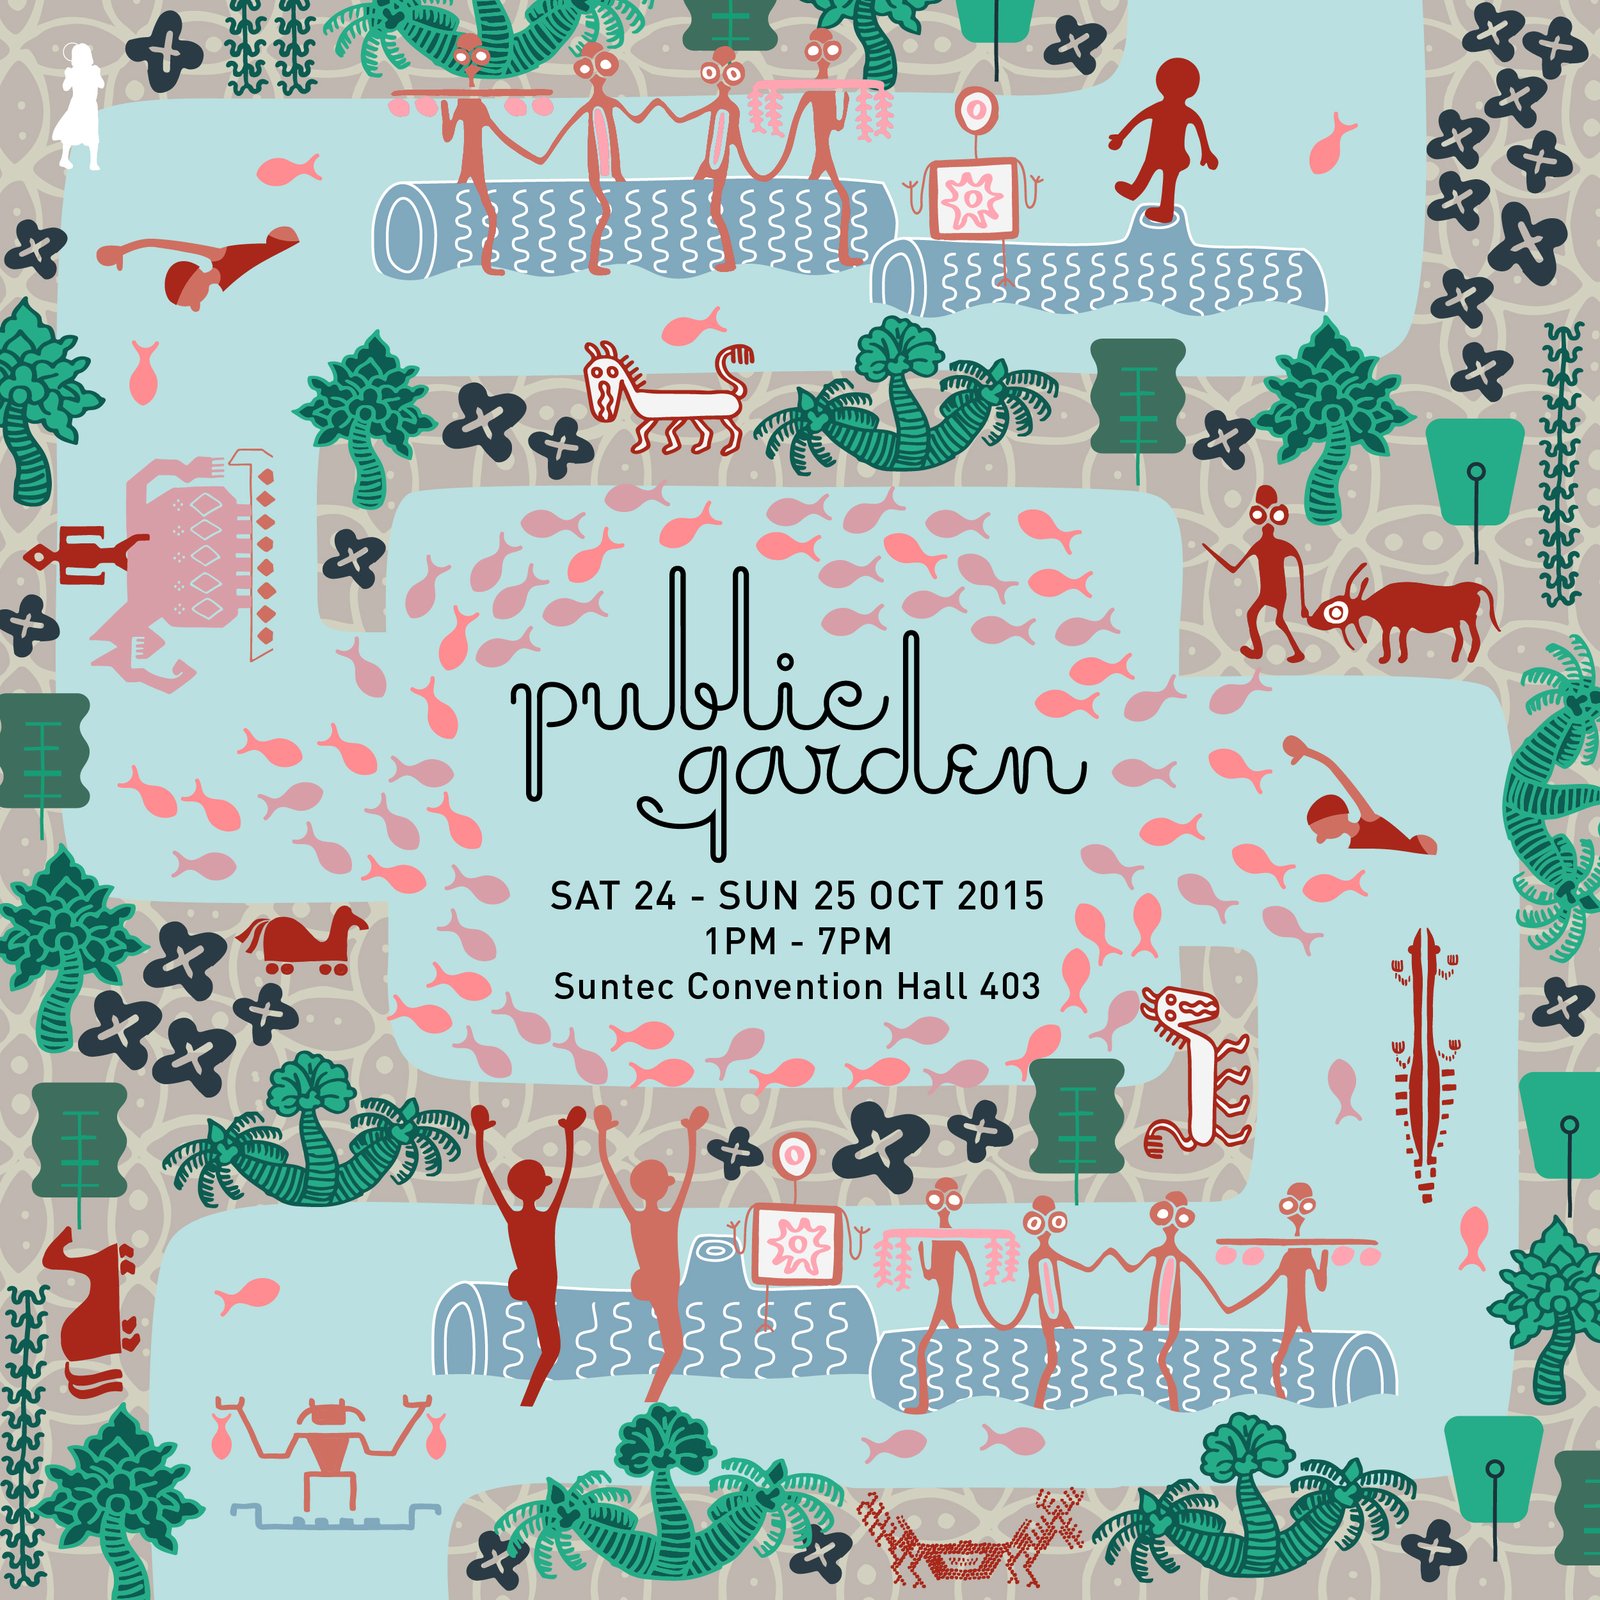 Public Garden Sat 24 - Sun 25 Oct 2015 Instagram Banner